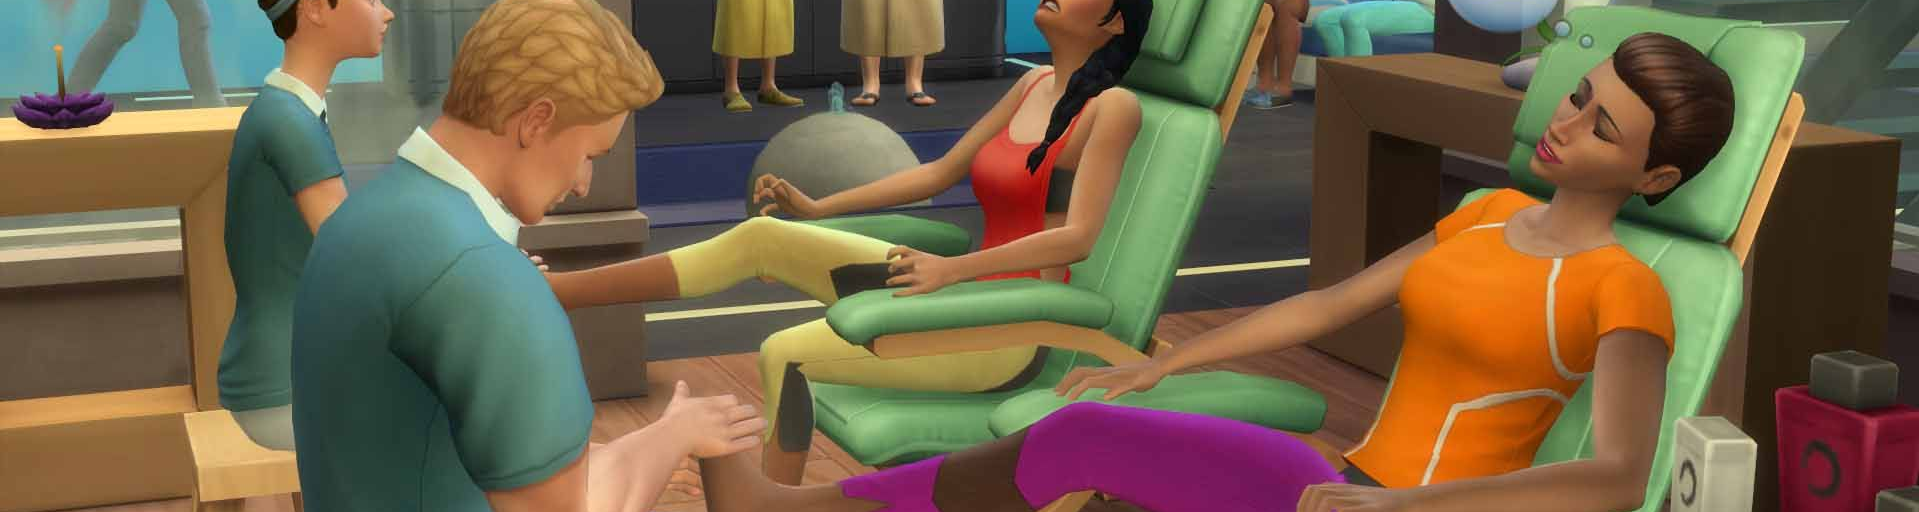 The Sims 4: Spa Day Origin CD Key bg